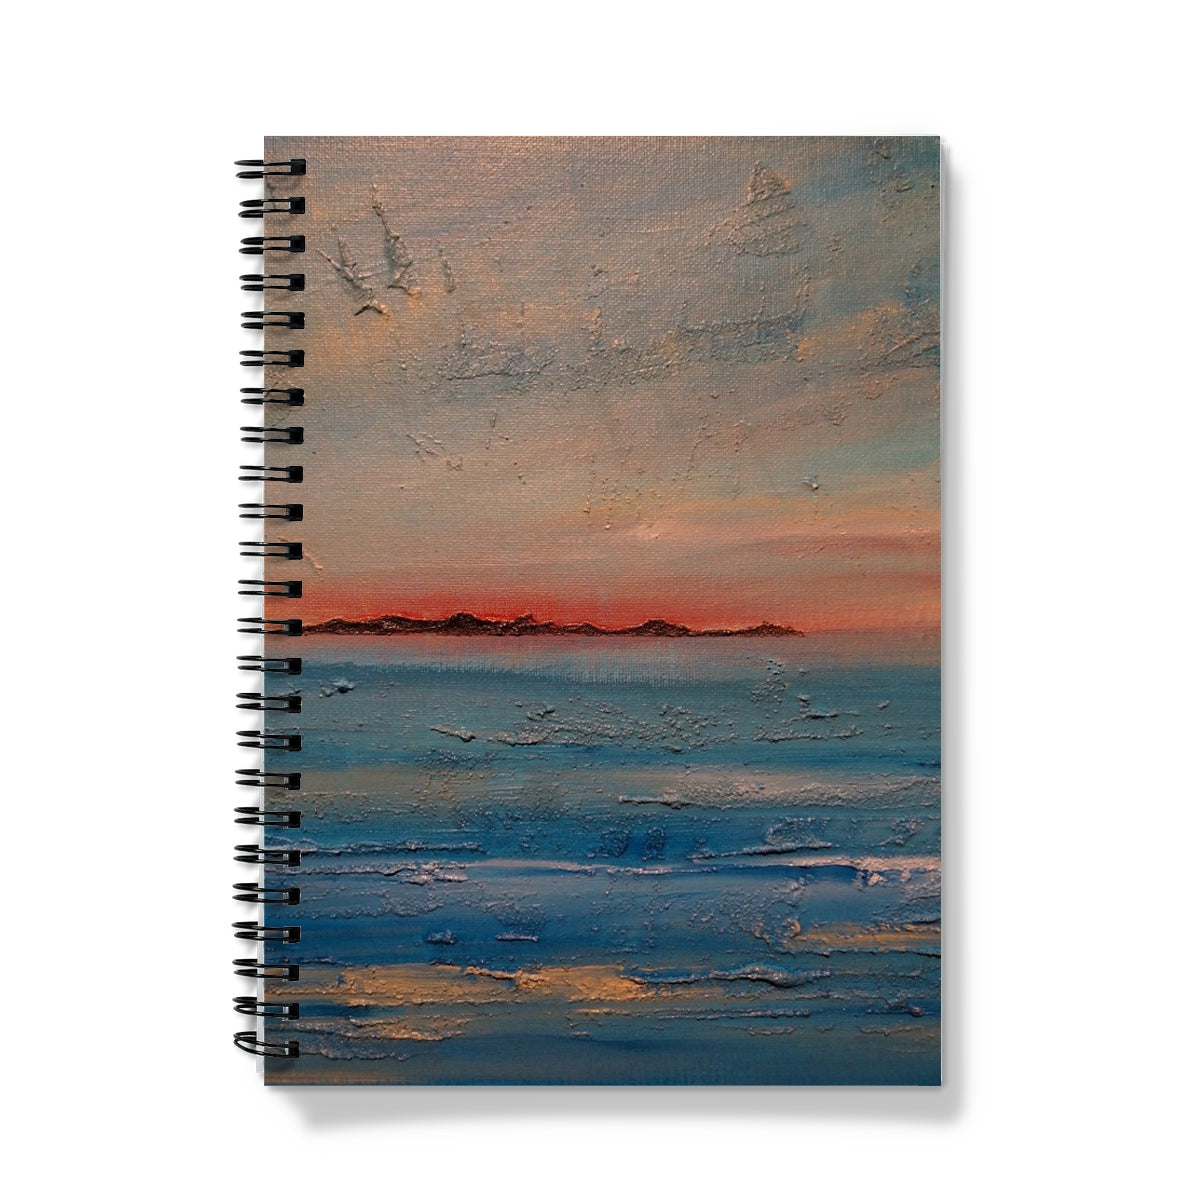 Gigha Sunset Art Gifts Notebook-Journals & Notebooks-Hebridean Islands Art Gallery-A4-Graph-Paintings, Prints, Homeware, Art Gifts From Scotland By Scottish Artist Kevin Hunter